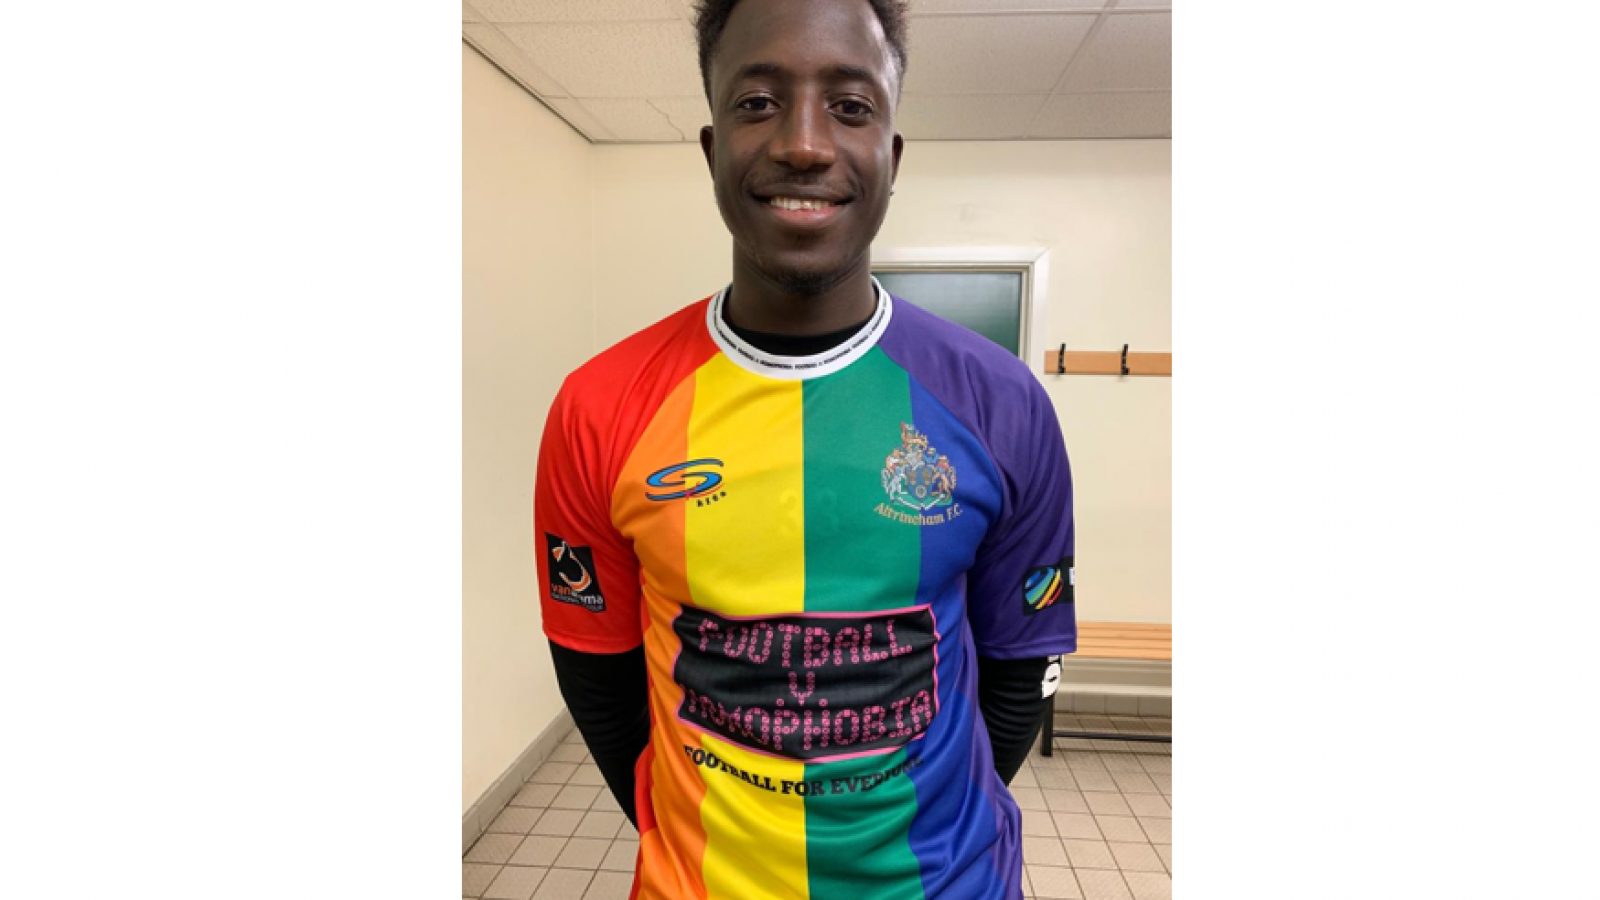 Altrincham Special football shirt 2019. Sponsored by Football v Homophobia